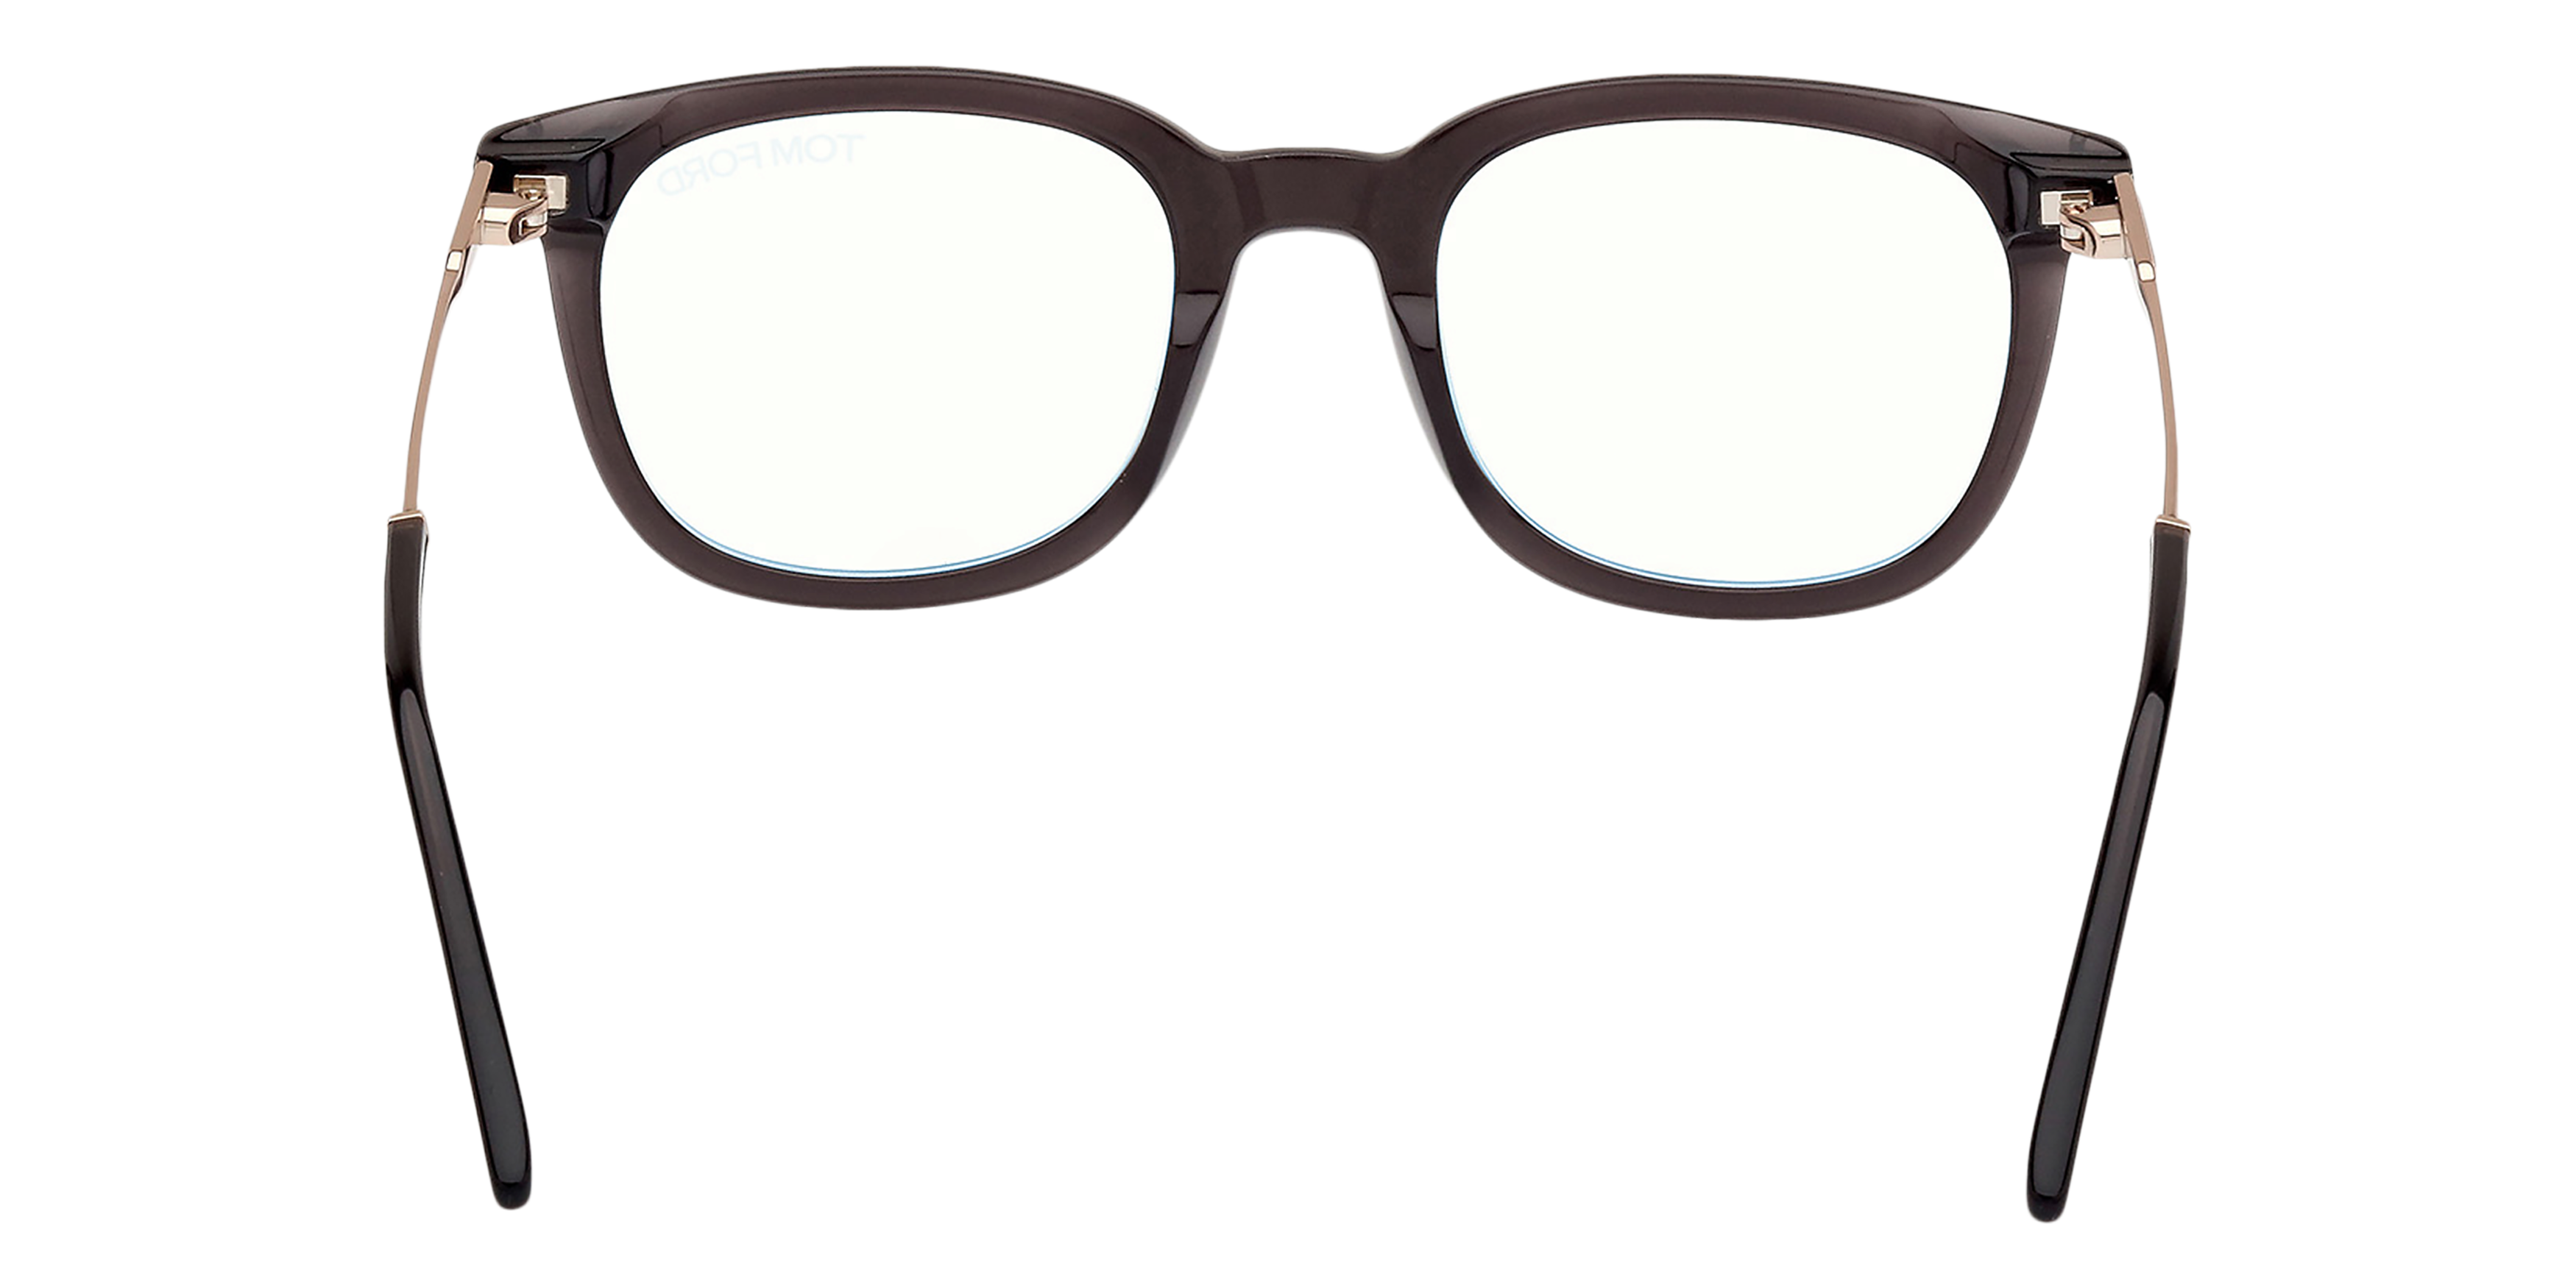 Detail02 Tom Ford FT 5904-B Glasses Transparent / Transparent, Black